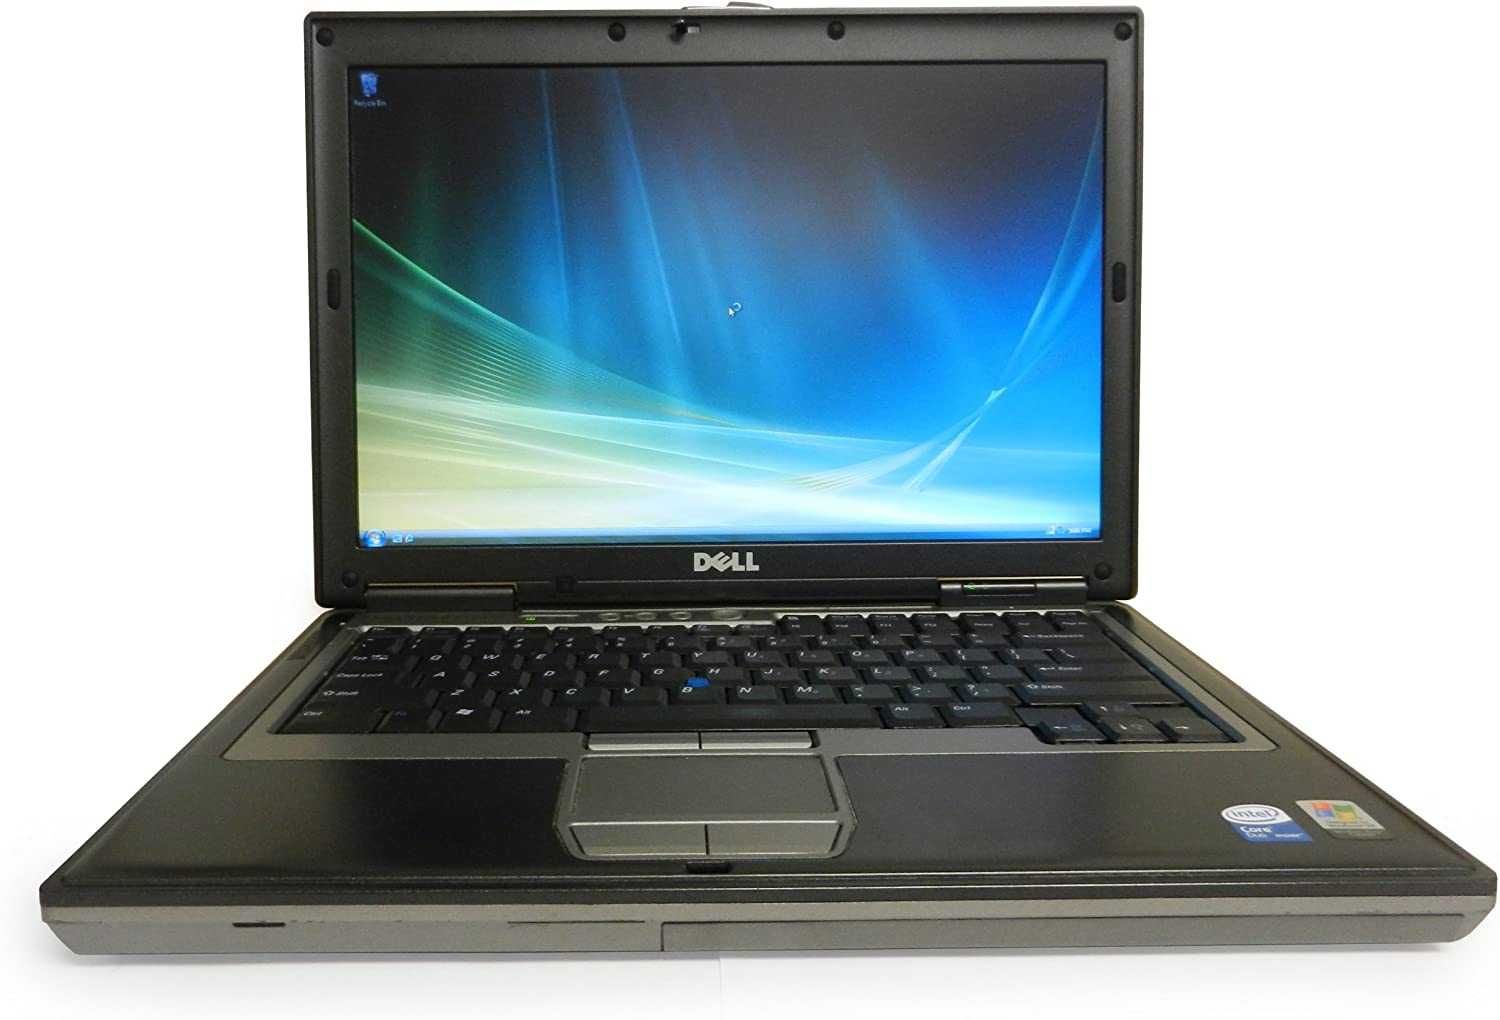 Laptop Dell D830, M4300, E5400, E5500